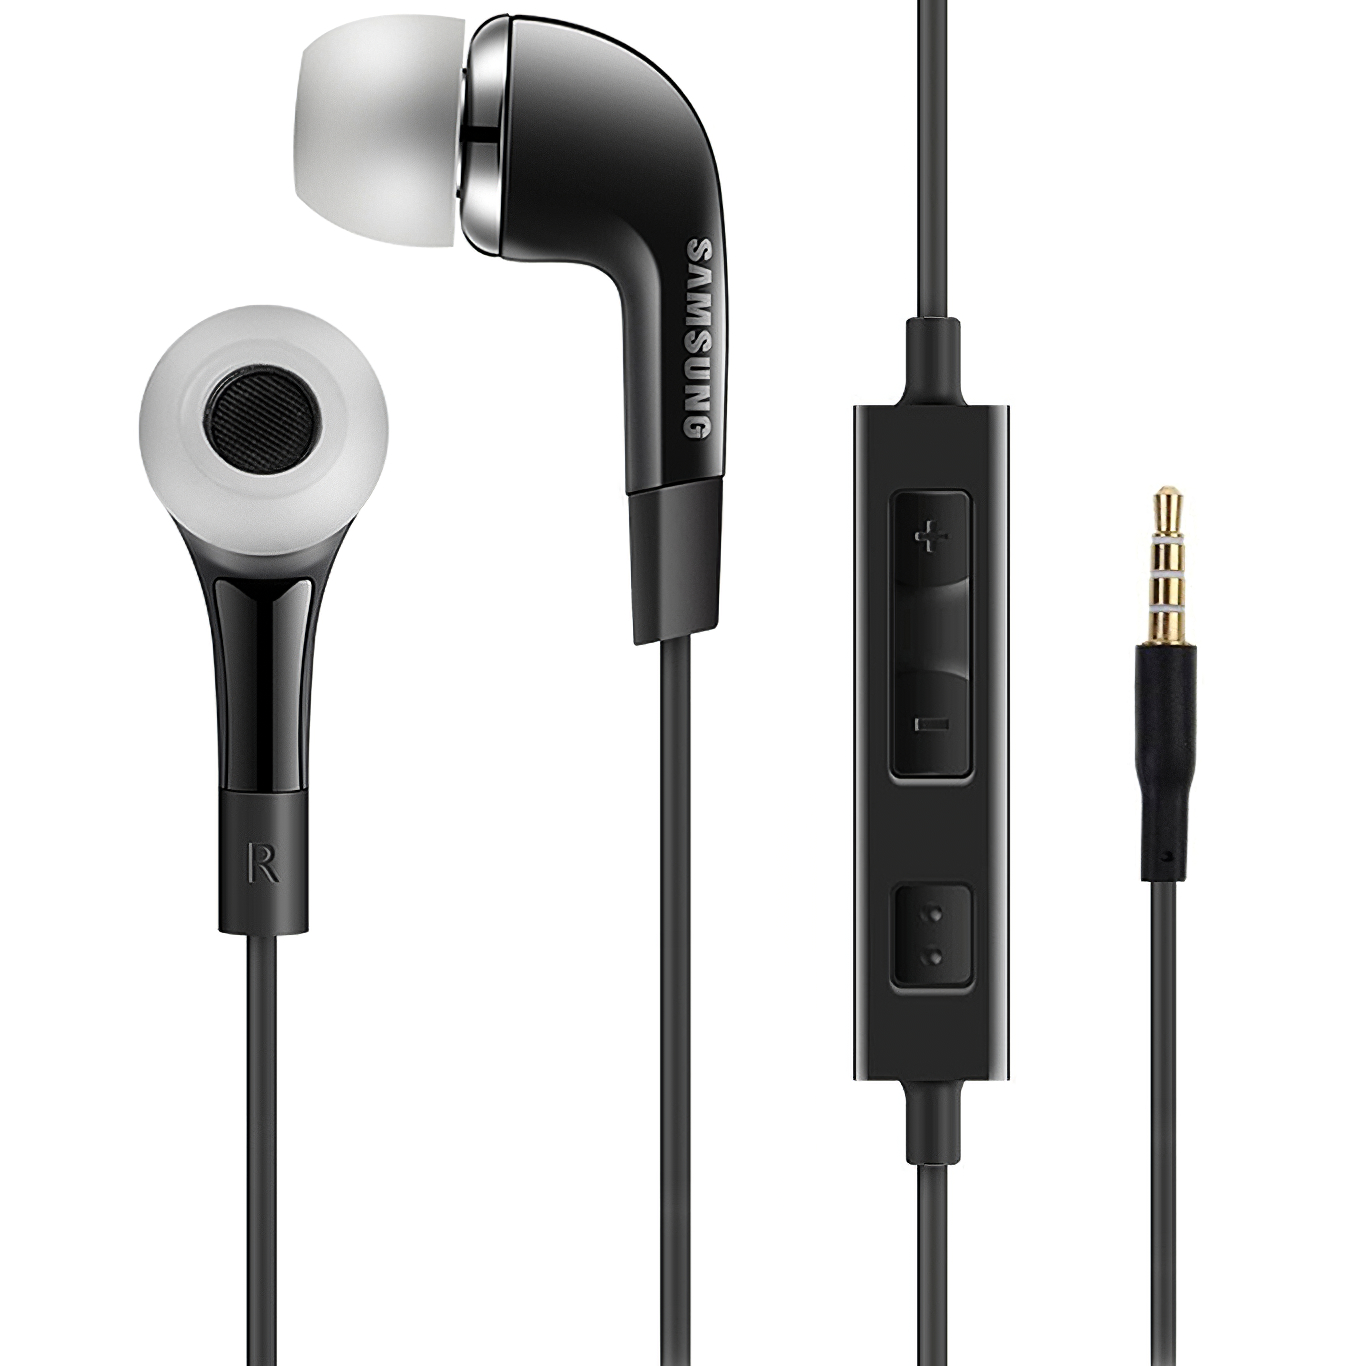 samsung-3.5mm-earphones-ehs64-black-gp-tou021csbbw-